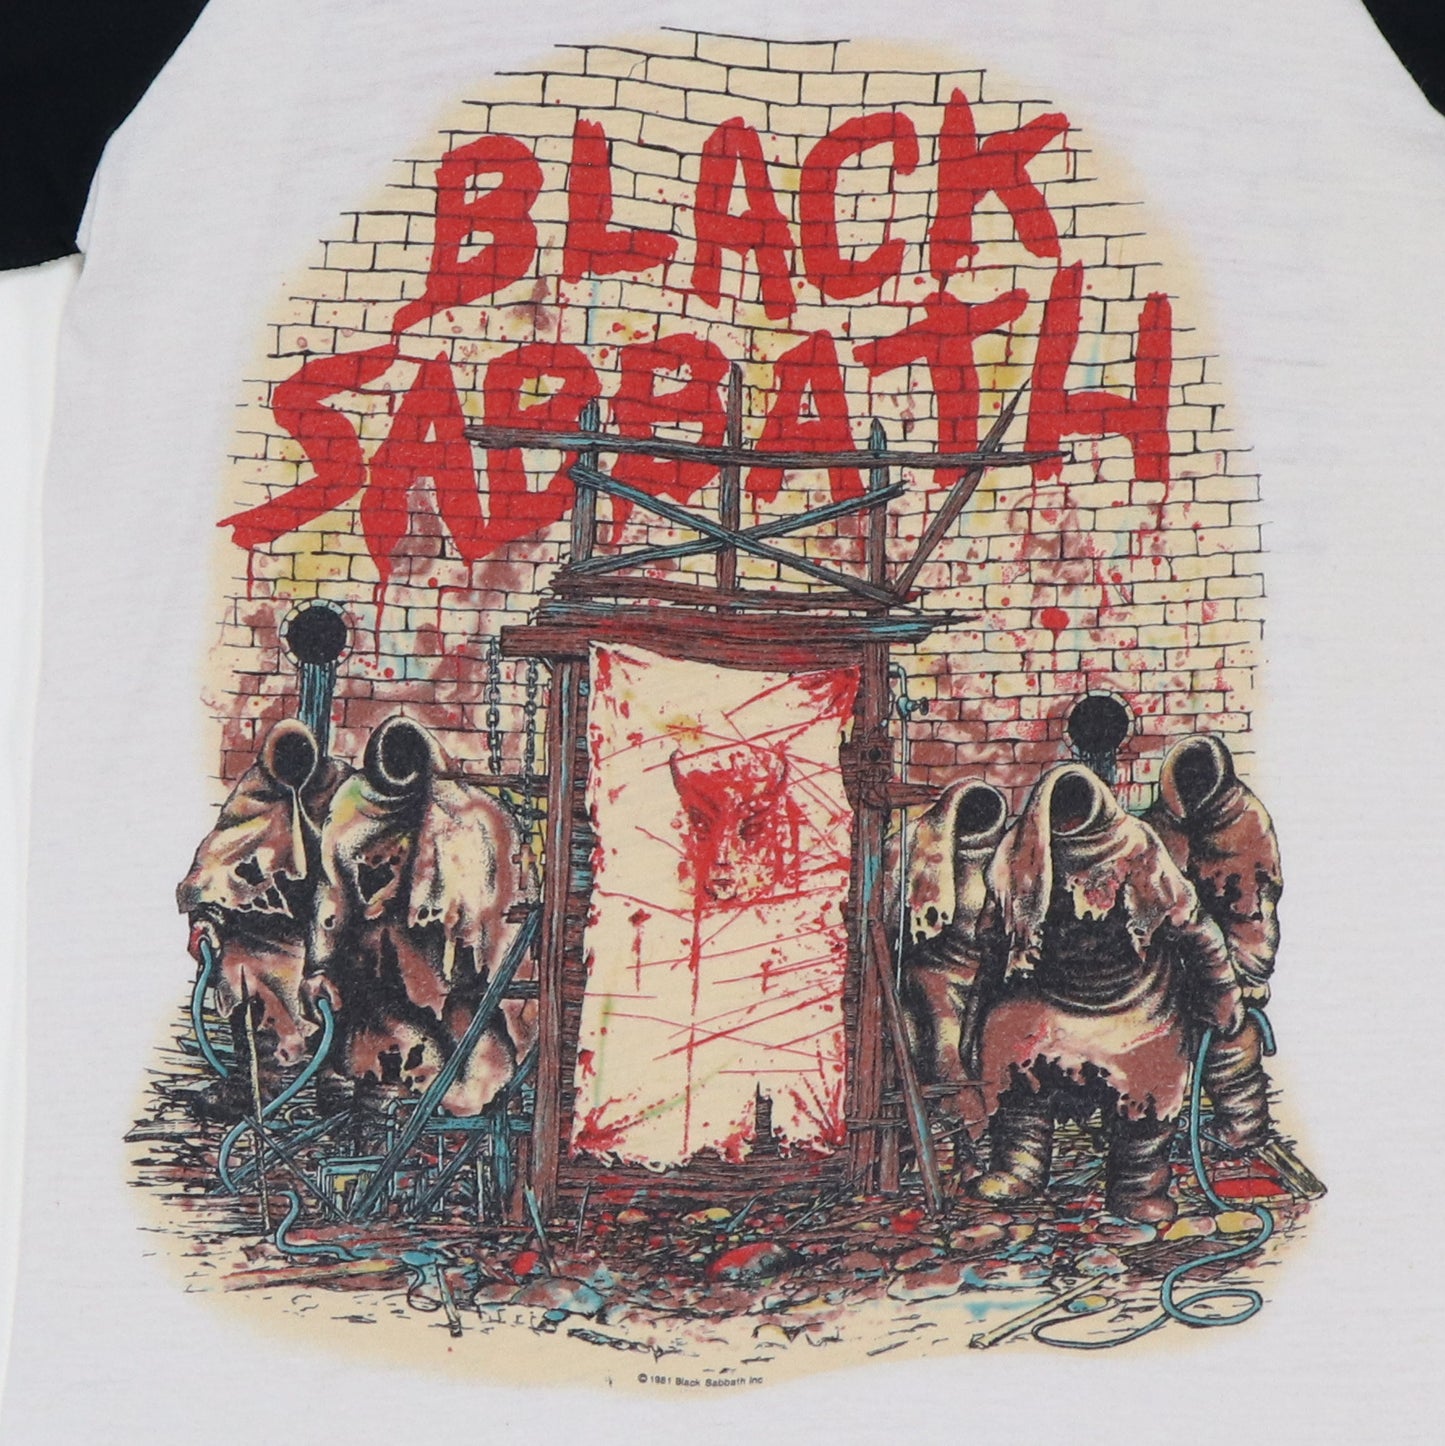 1981 Black Sabbath Mob Rules Tour Jersey Shirt